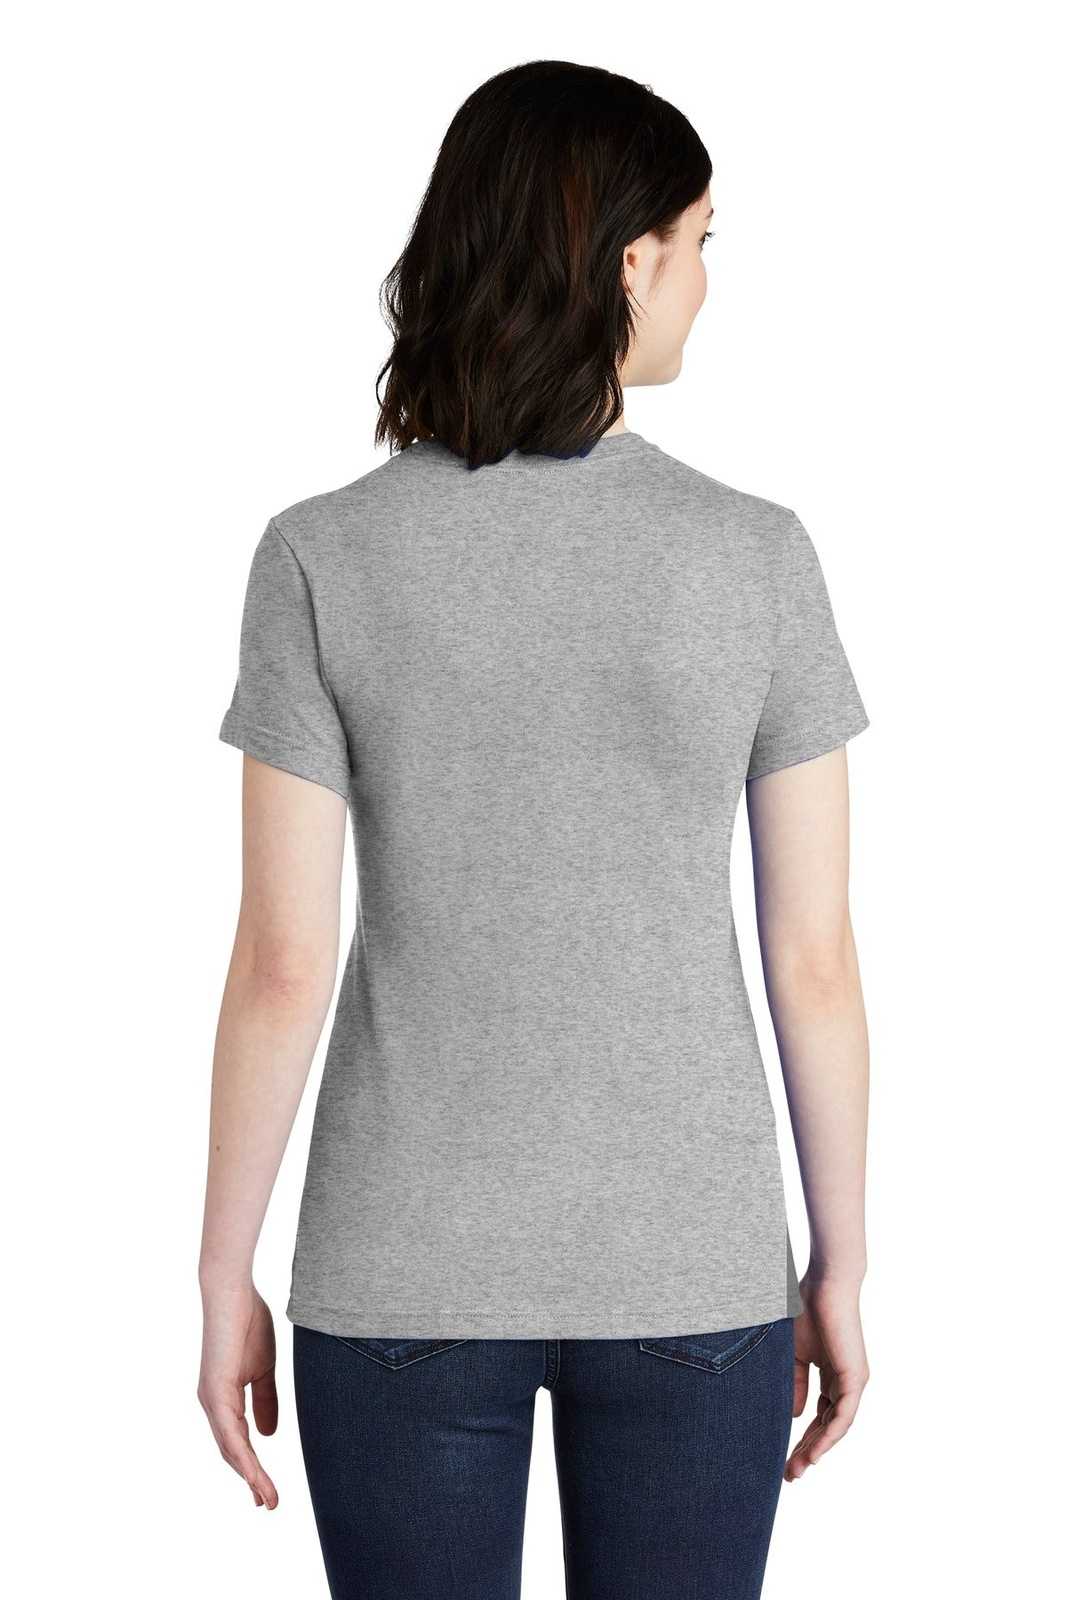 American Apparel 2102W Women's Fine Jersey T-Shirt - Heather Gray - HIT a Double